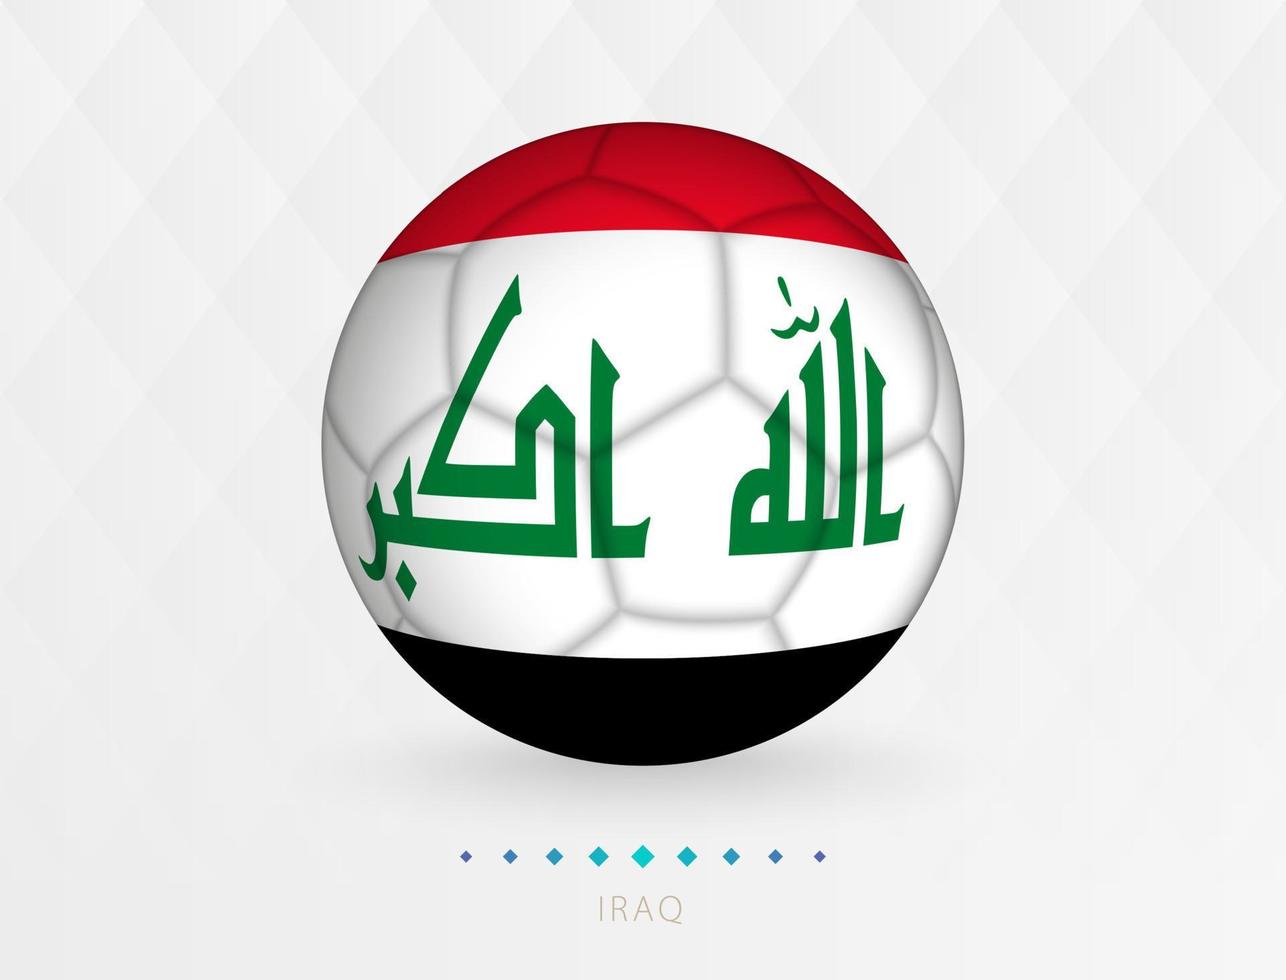 ballon de football avec motif drapeau irakien, ballon de football avec drapeau de l'équipe nationale irakienne. vecteur